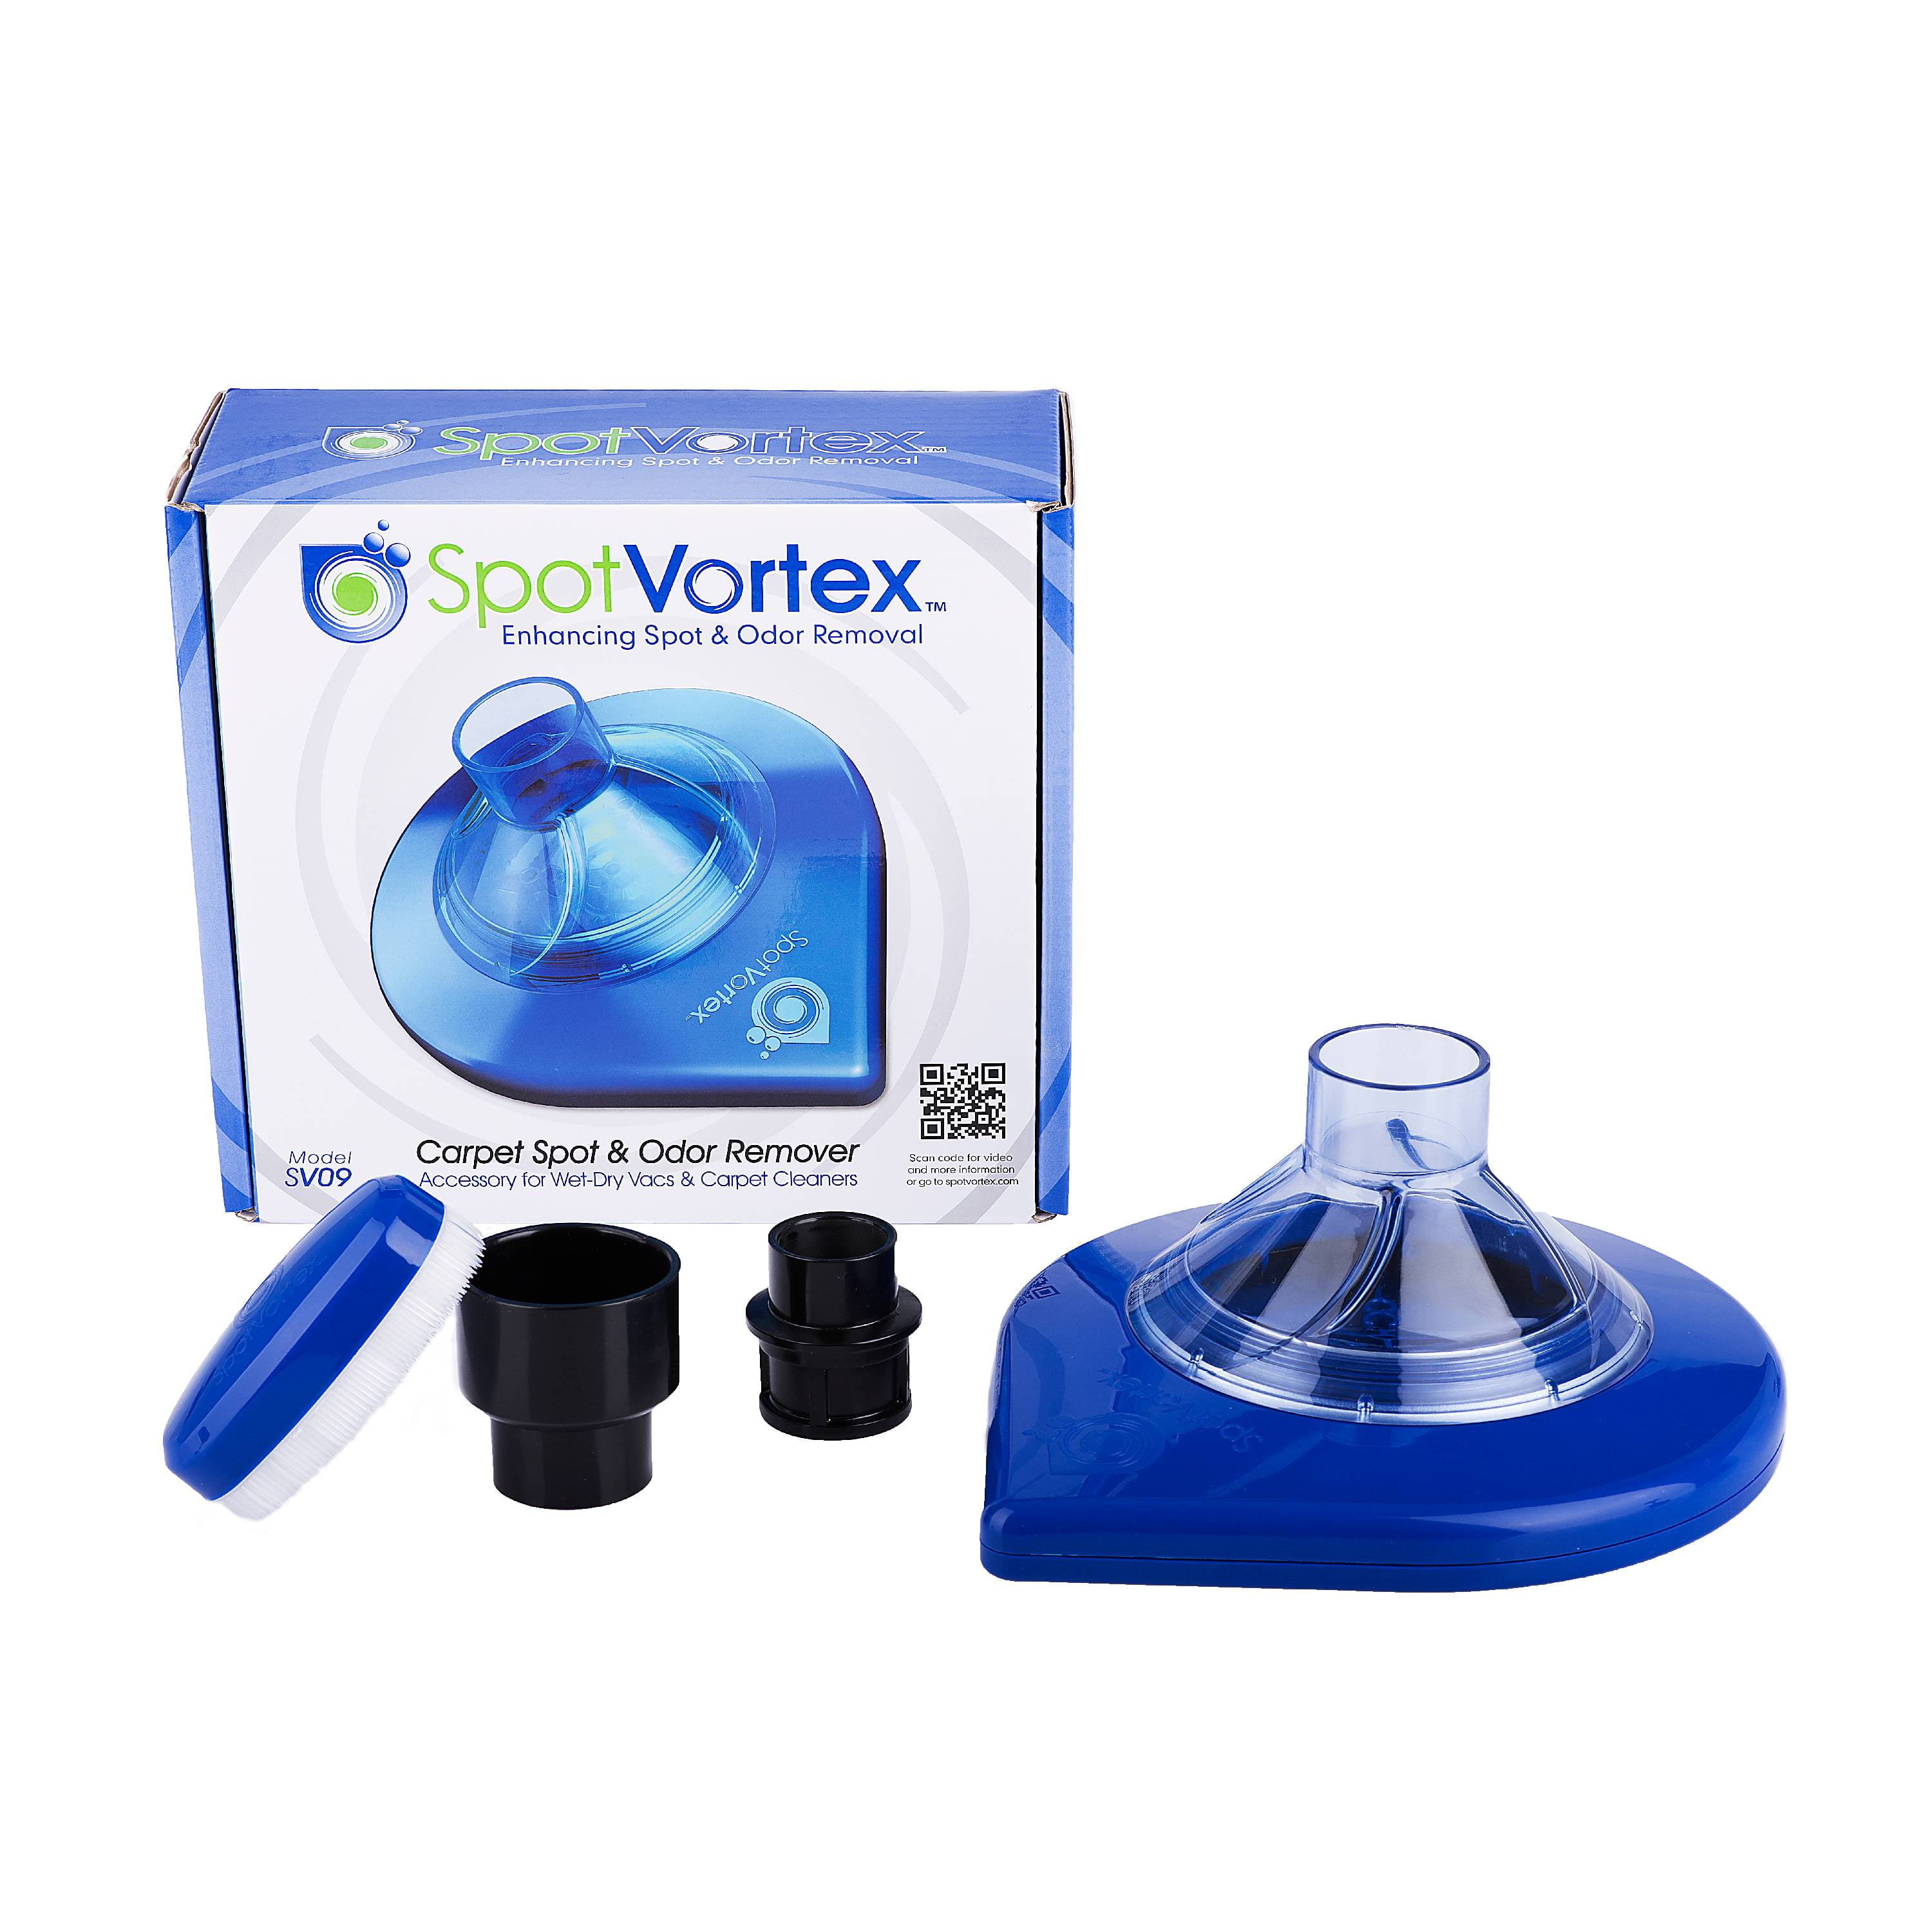 SPOT VORTEX Carpet Spot and Odor Remover Accessory Tool SV09 FREE SHIPPING 